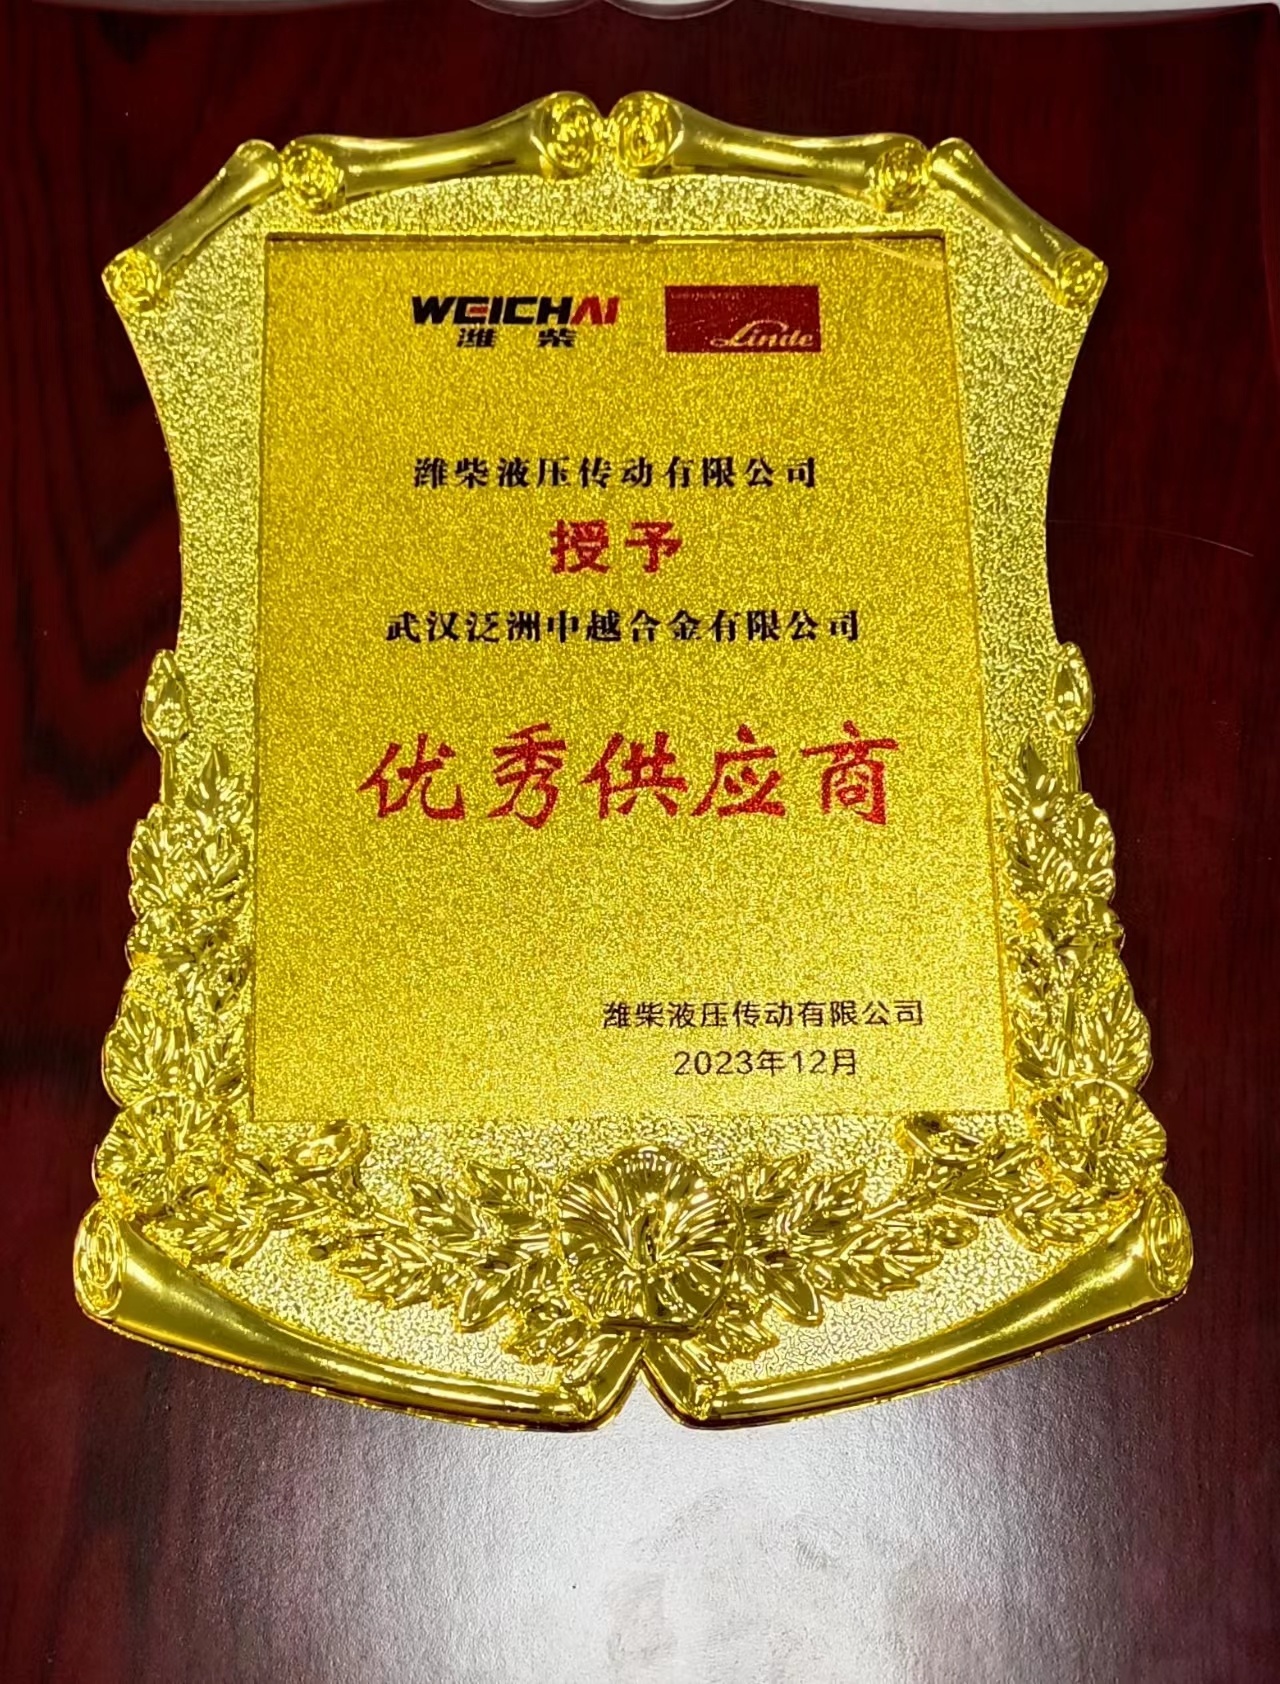 Wuhan Pan Zhou Zhongyue Alloy Co., Ltd. won the Outstanding Supplier Award from Weichai Hydraulic Transmission Co., Ltd.